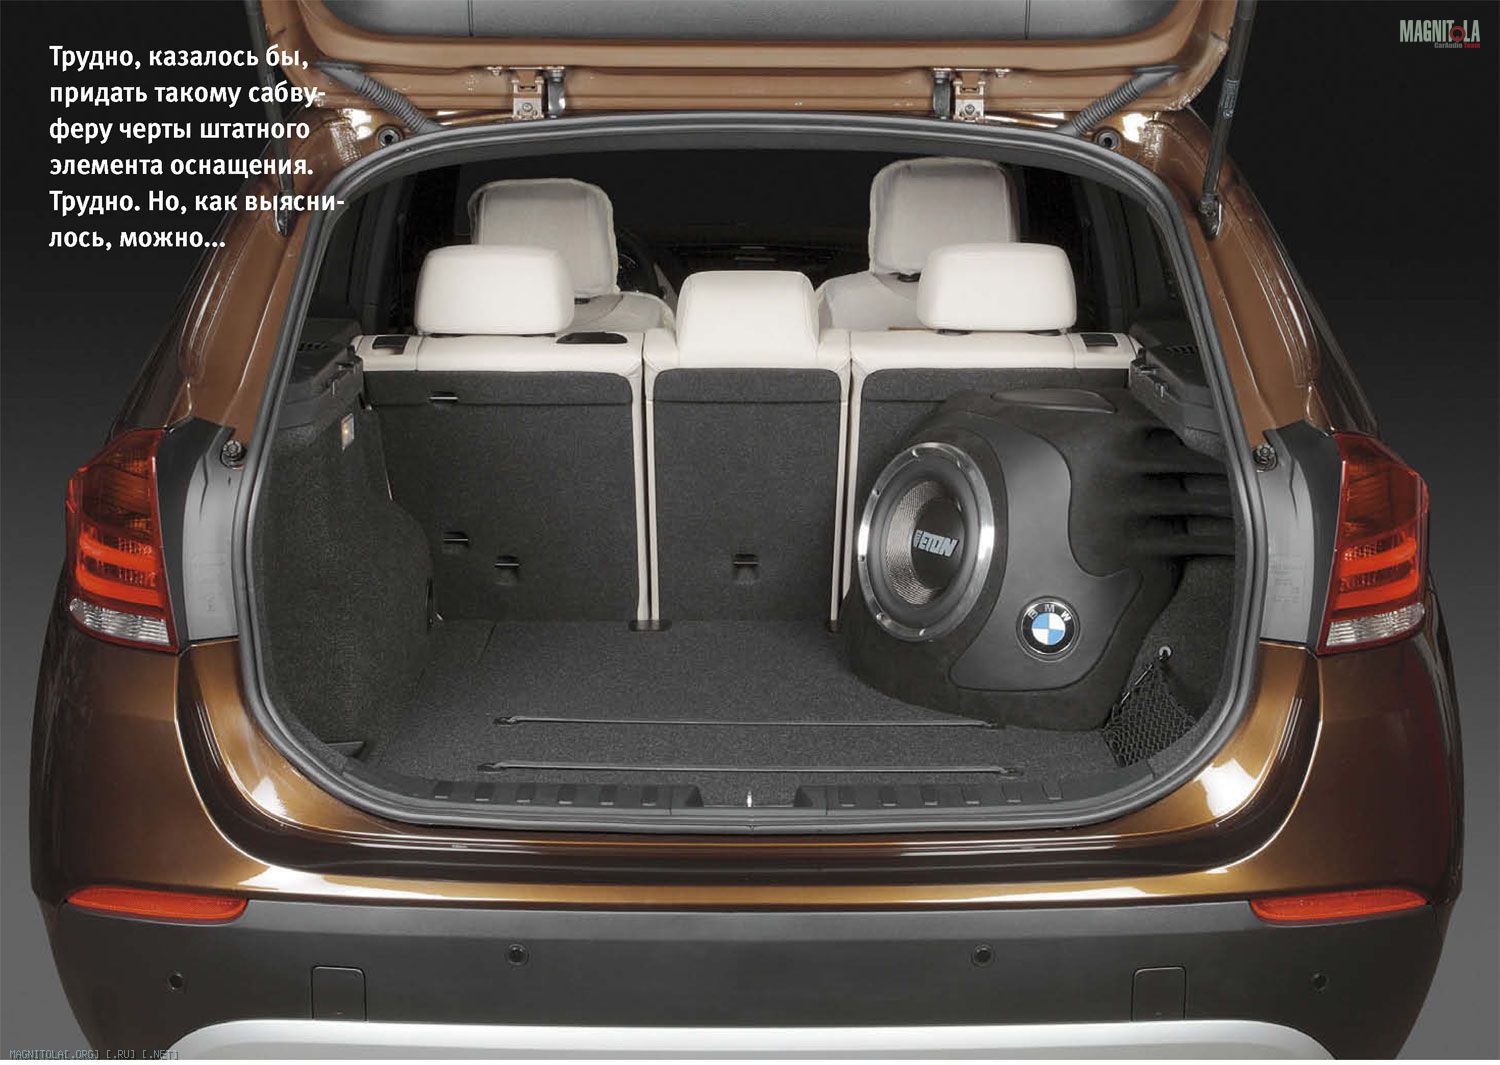 BMW x1 багажник